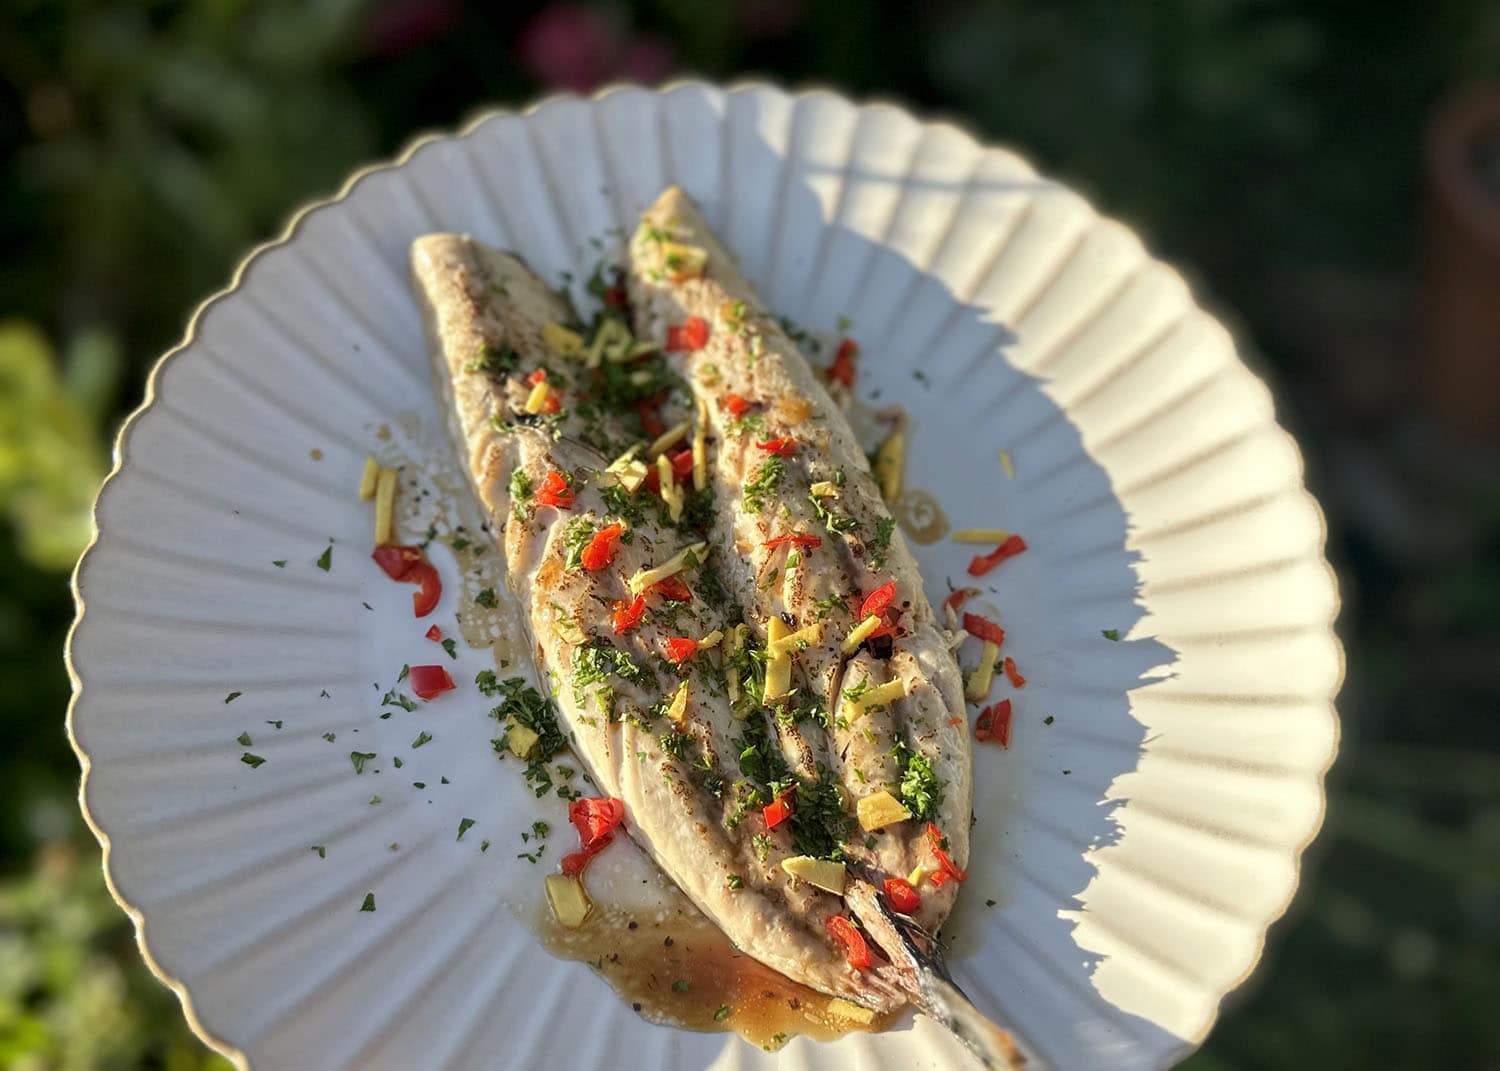 Butterflied mackerel with wasabi & yuzu dressing made with Borough Market ingredients